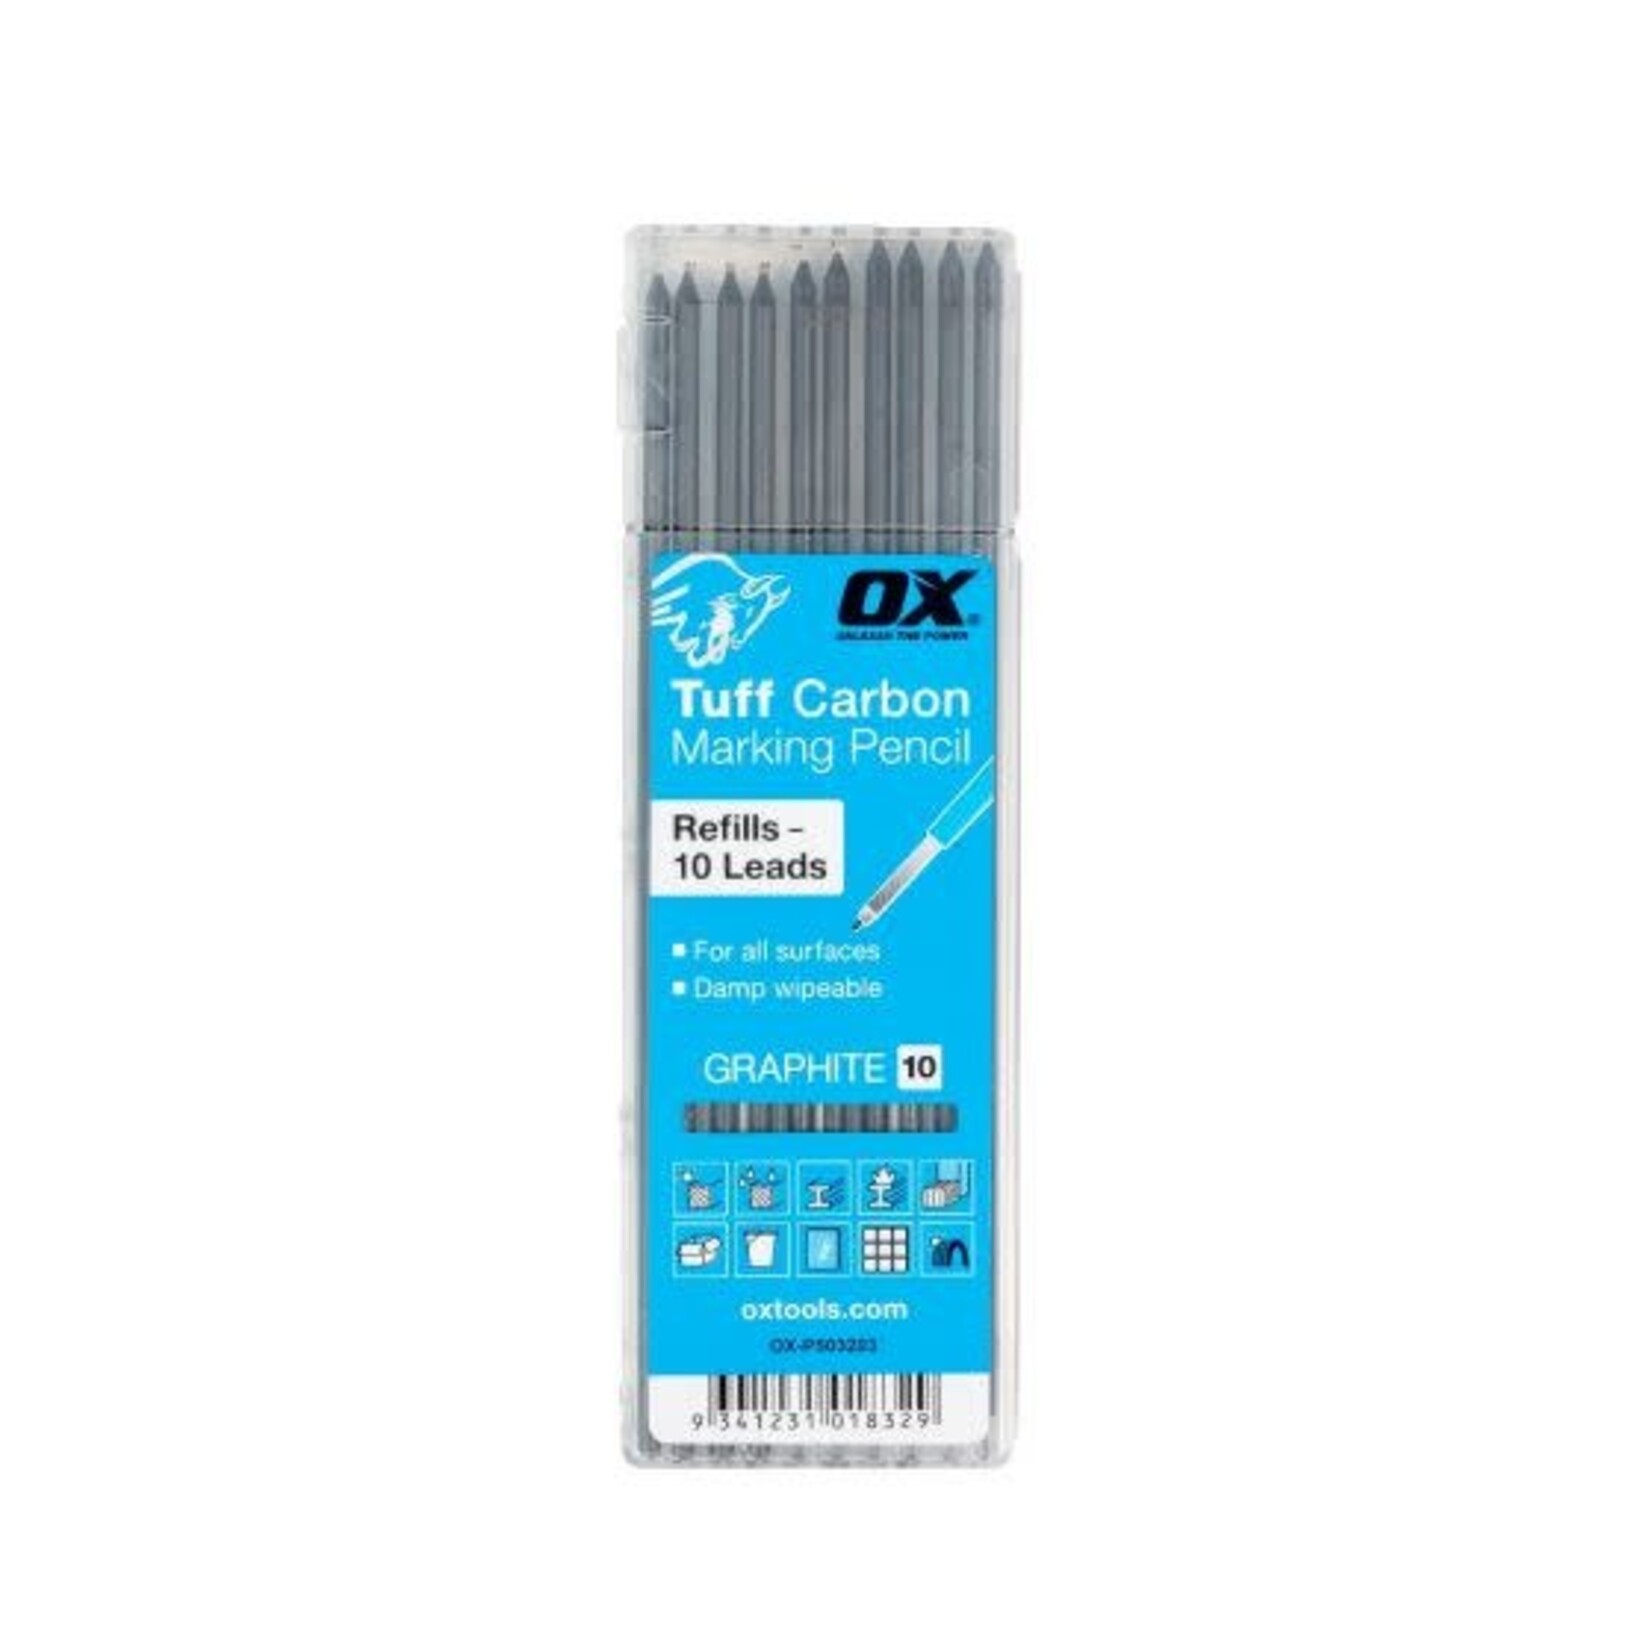 Ox Tools Tuff Carbon Marking Pencil Refills 10 leads